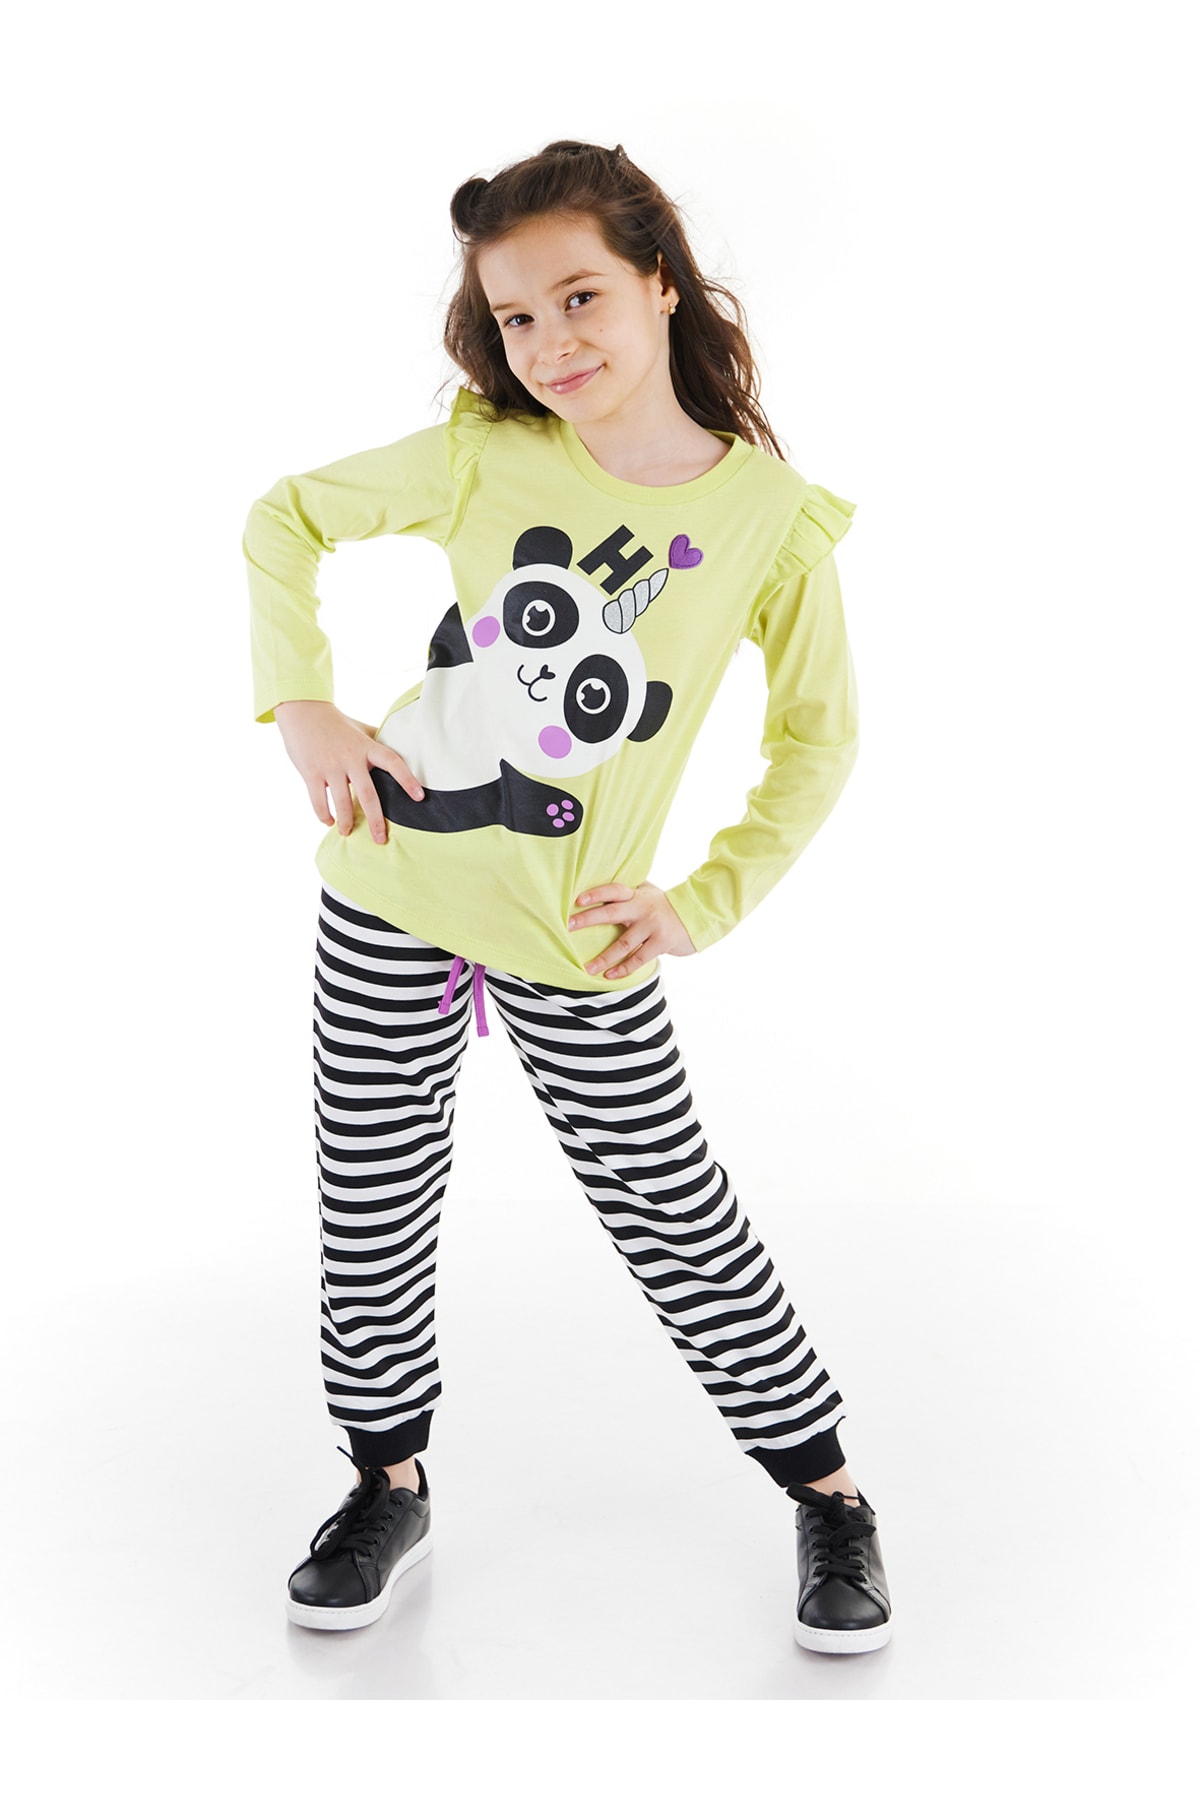 Denokids Hello Pandacorn Girls T-shirt Pants Suit